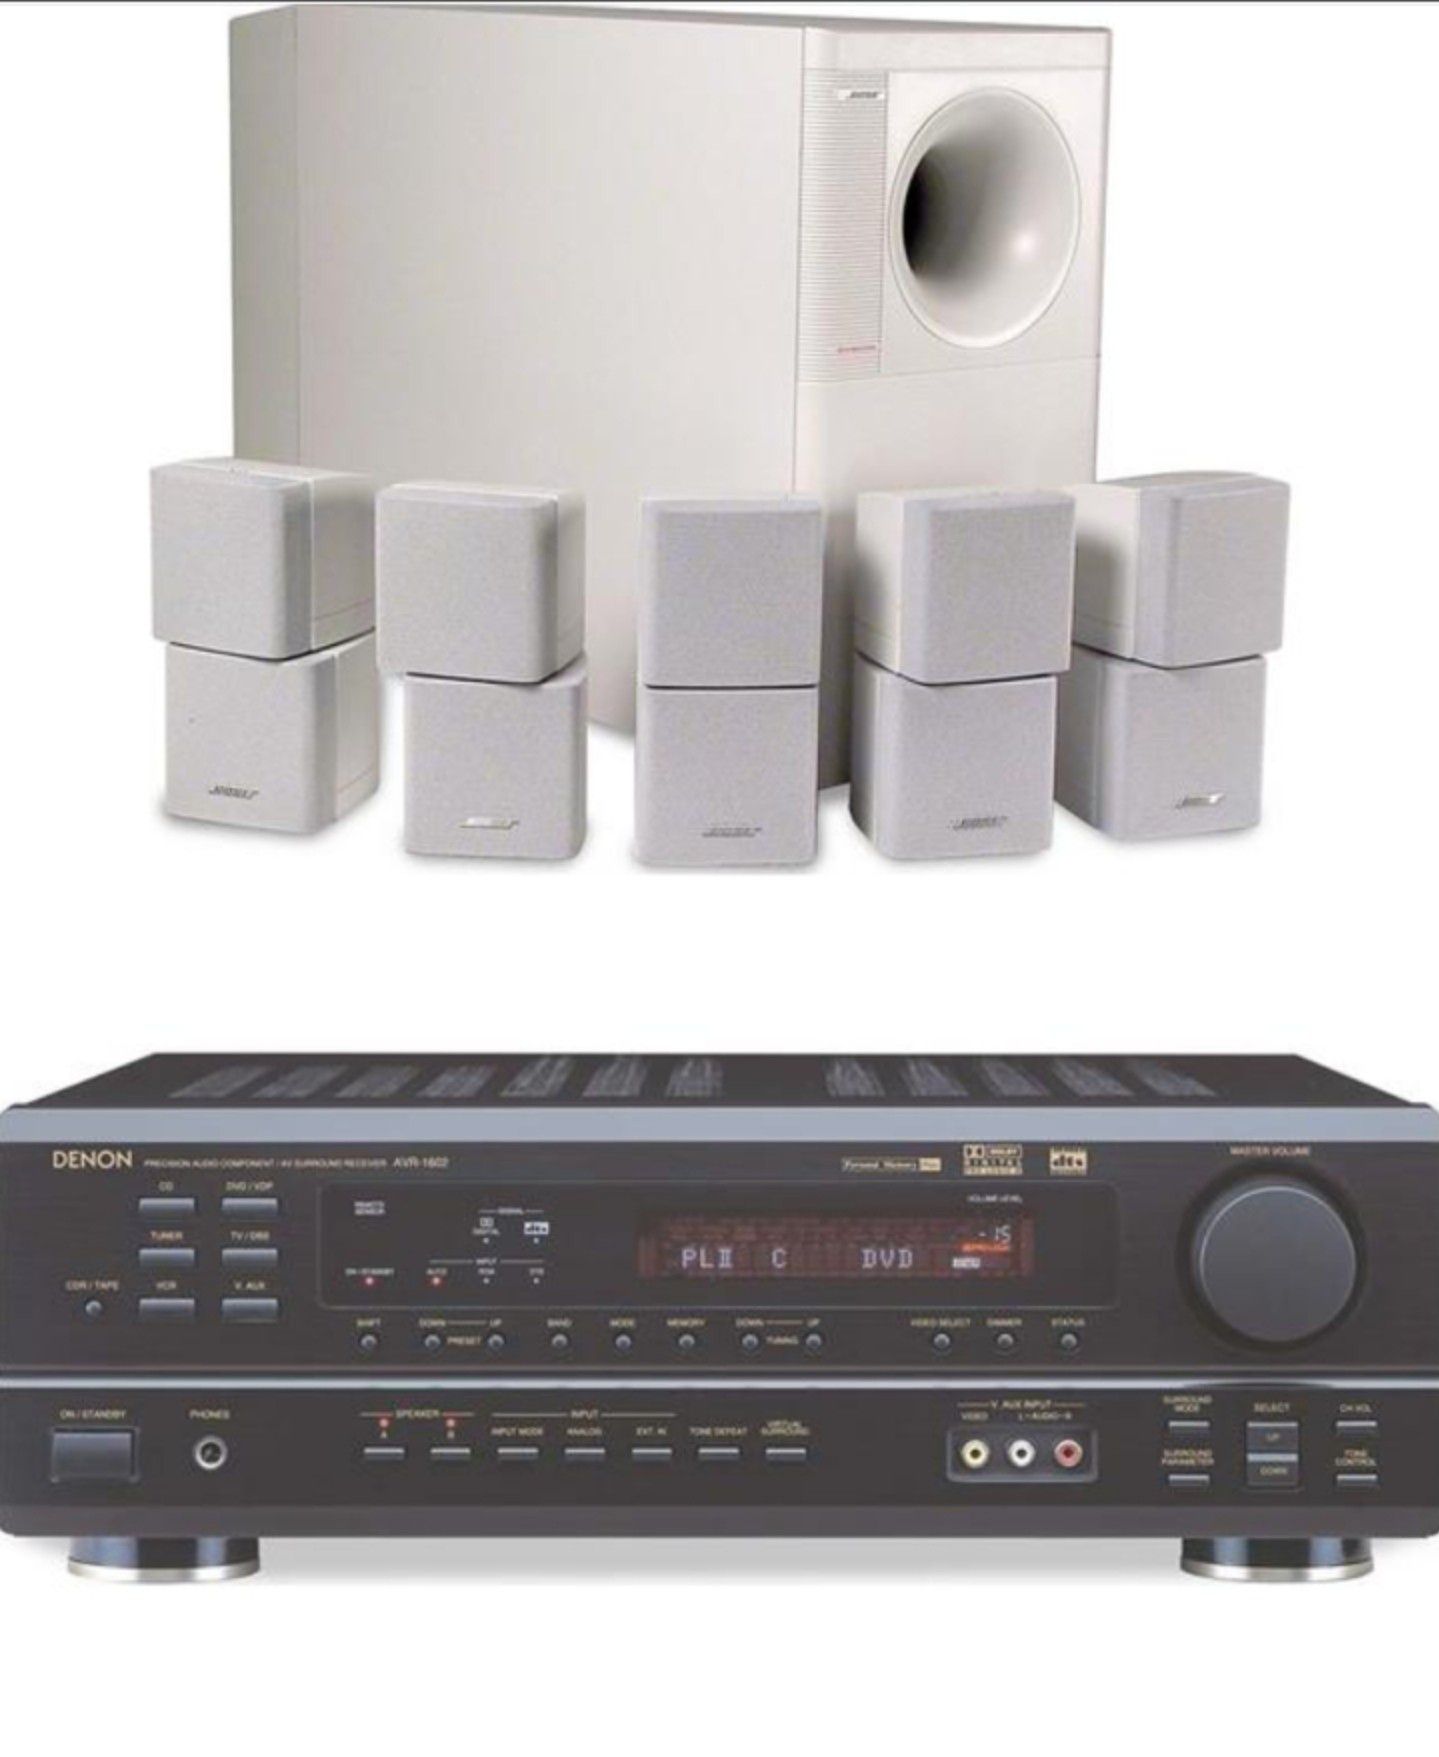 Bose 5.1 surround system with Denon audio reciever